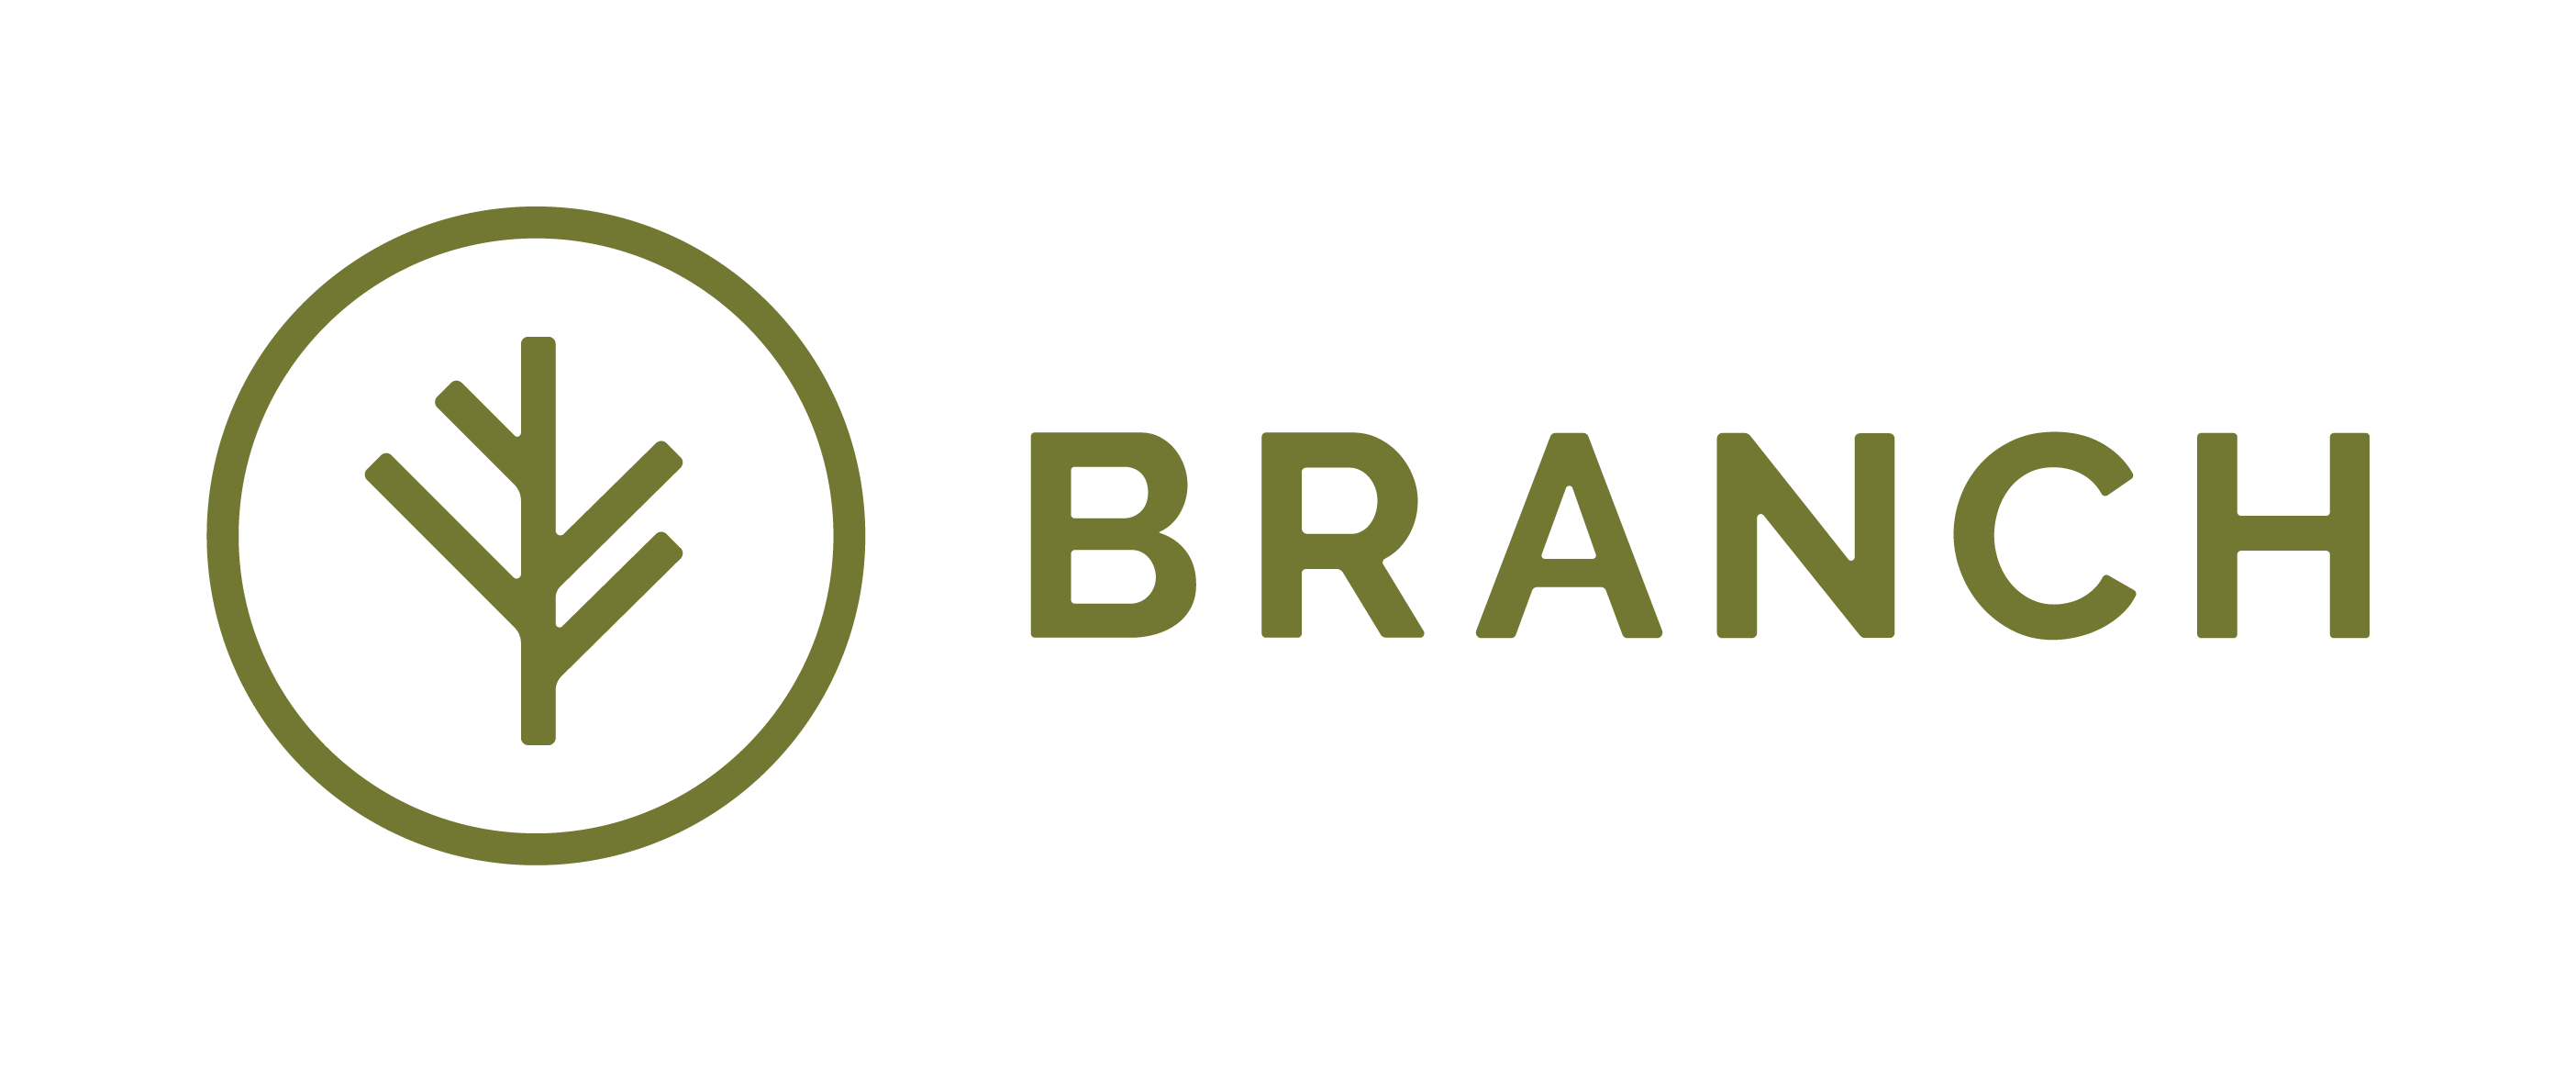 Branch logo horizontal